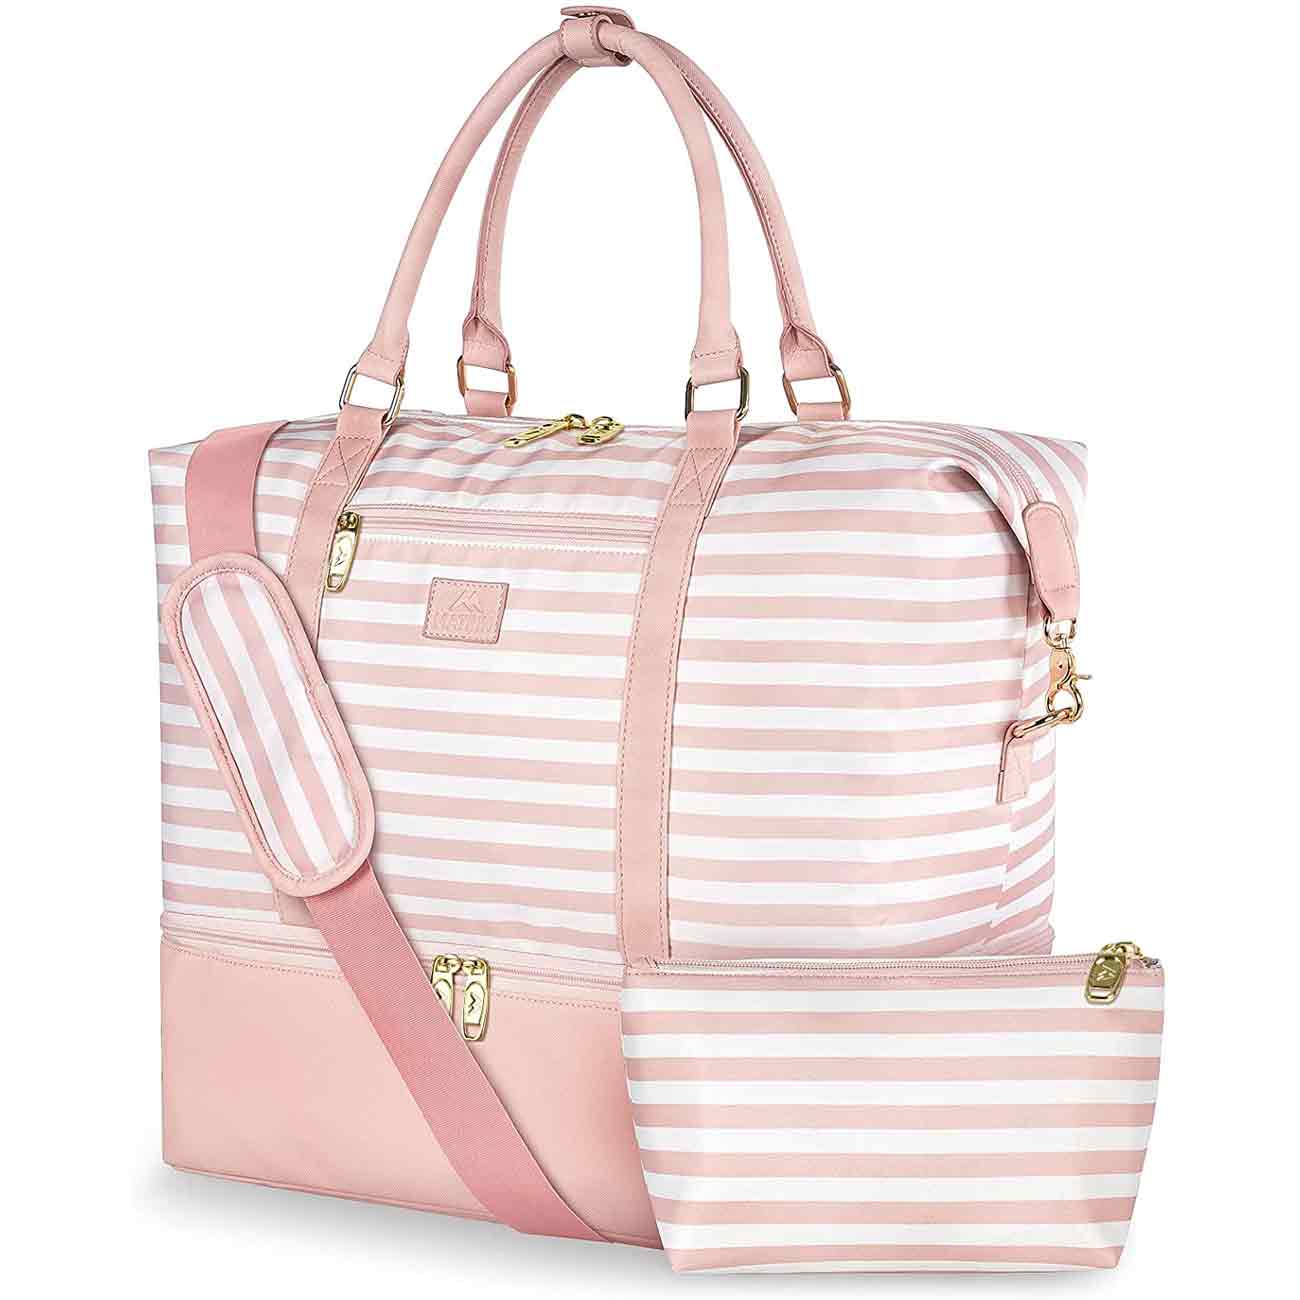 Victoria's Secret Tote Bag Shopping Pink White India